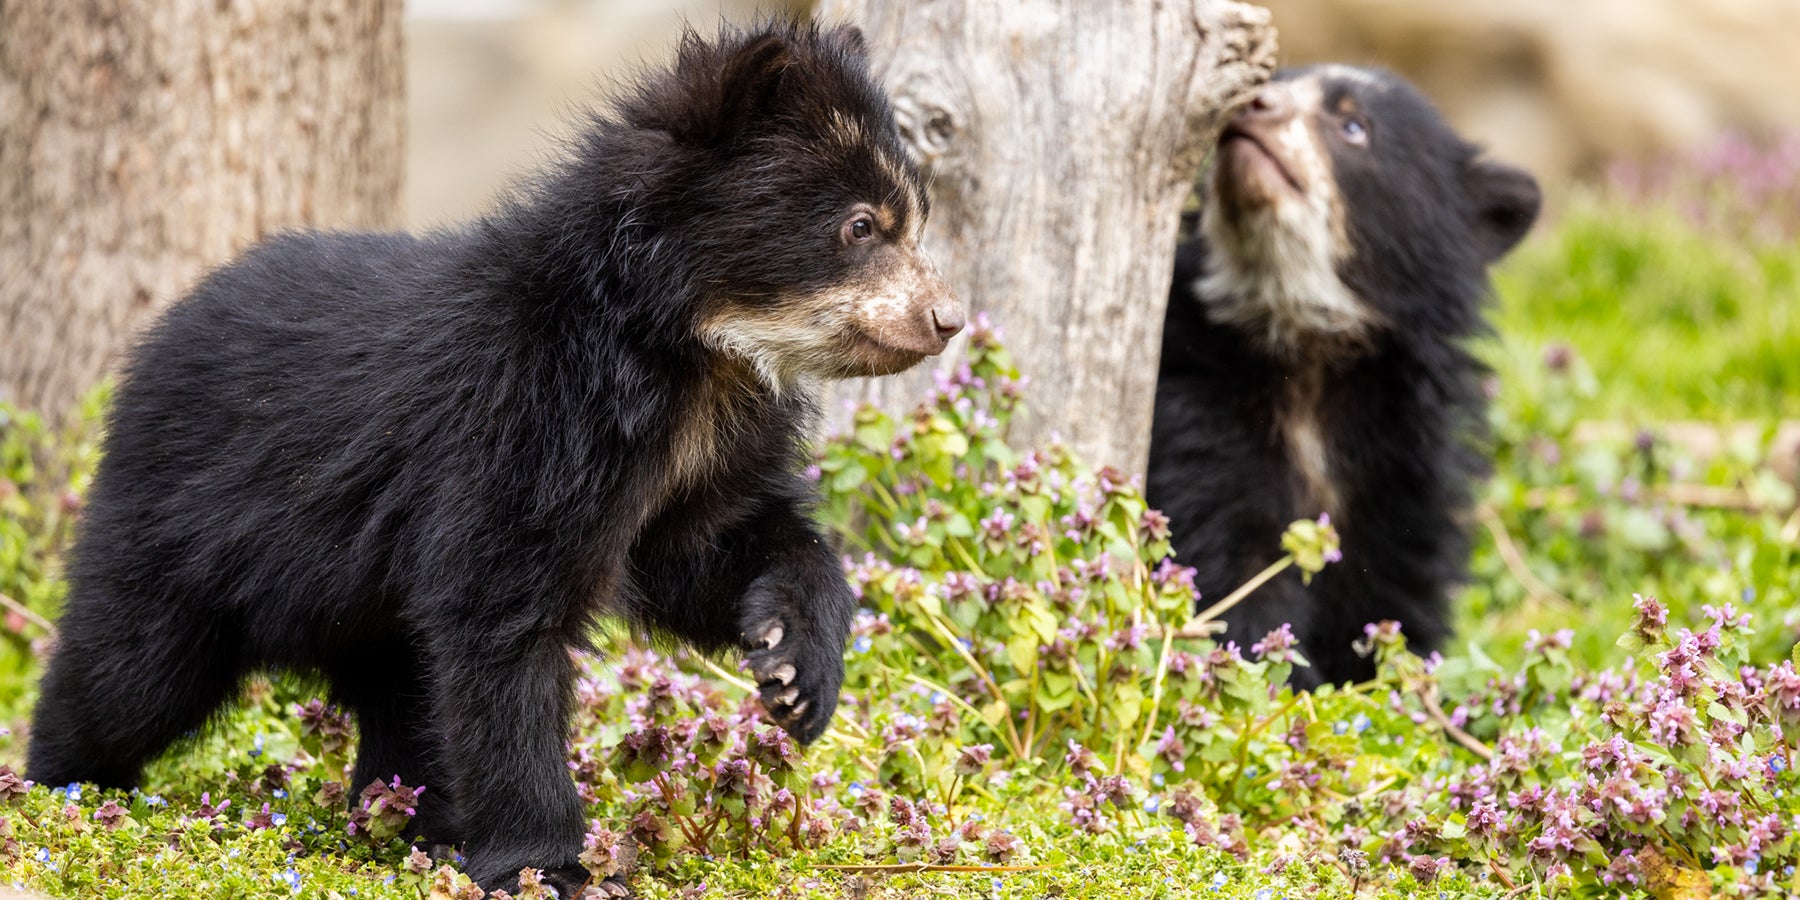 Andean bear cubs Sean and Ian explore their outdoor habitat. 